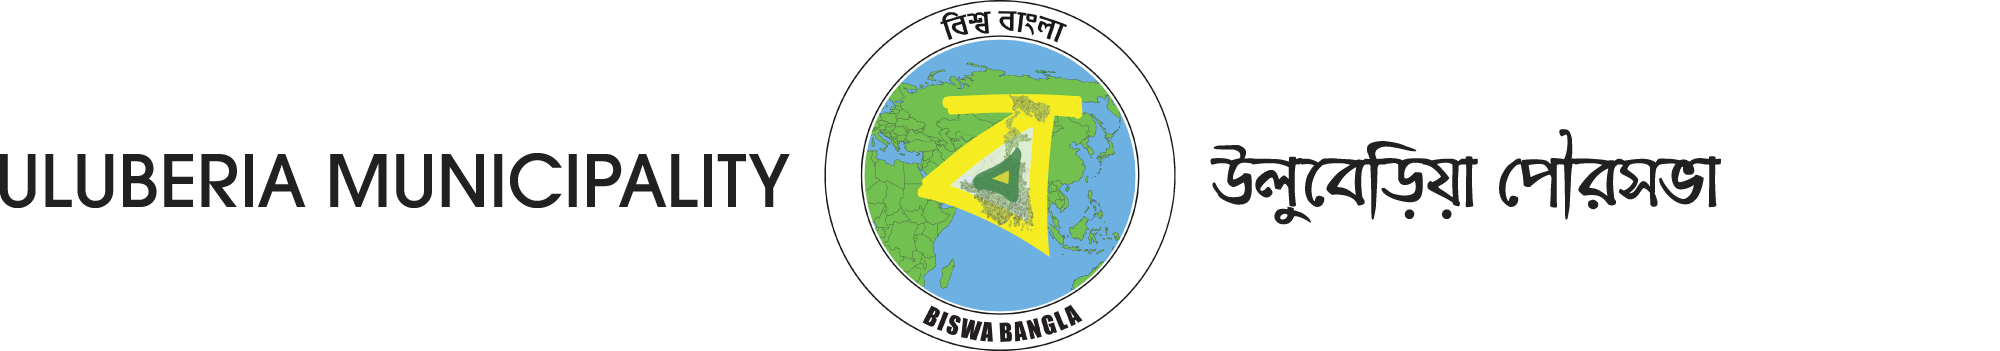 West Bengal's Mamata Banerjee govt introduces new blue-white school uniform  with Biswa Bangla logo